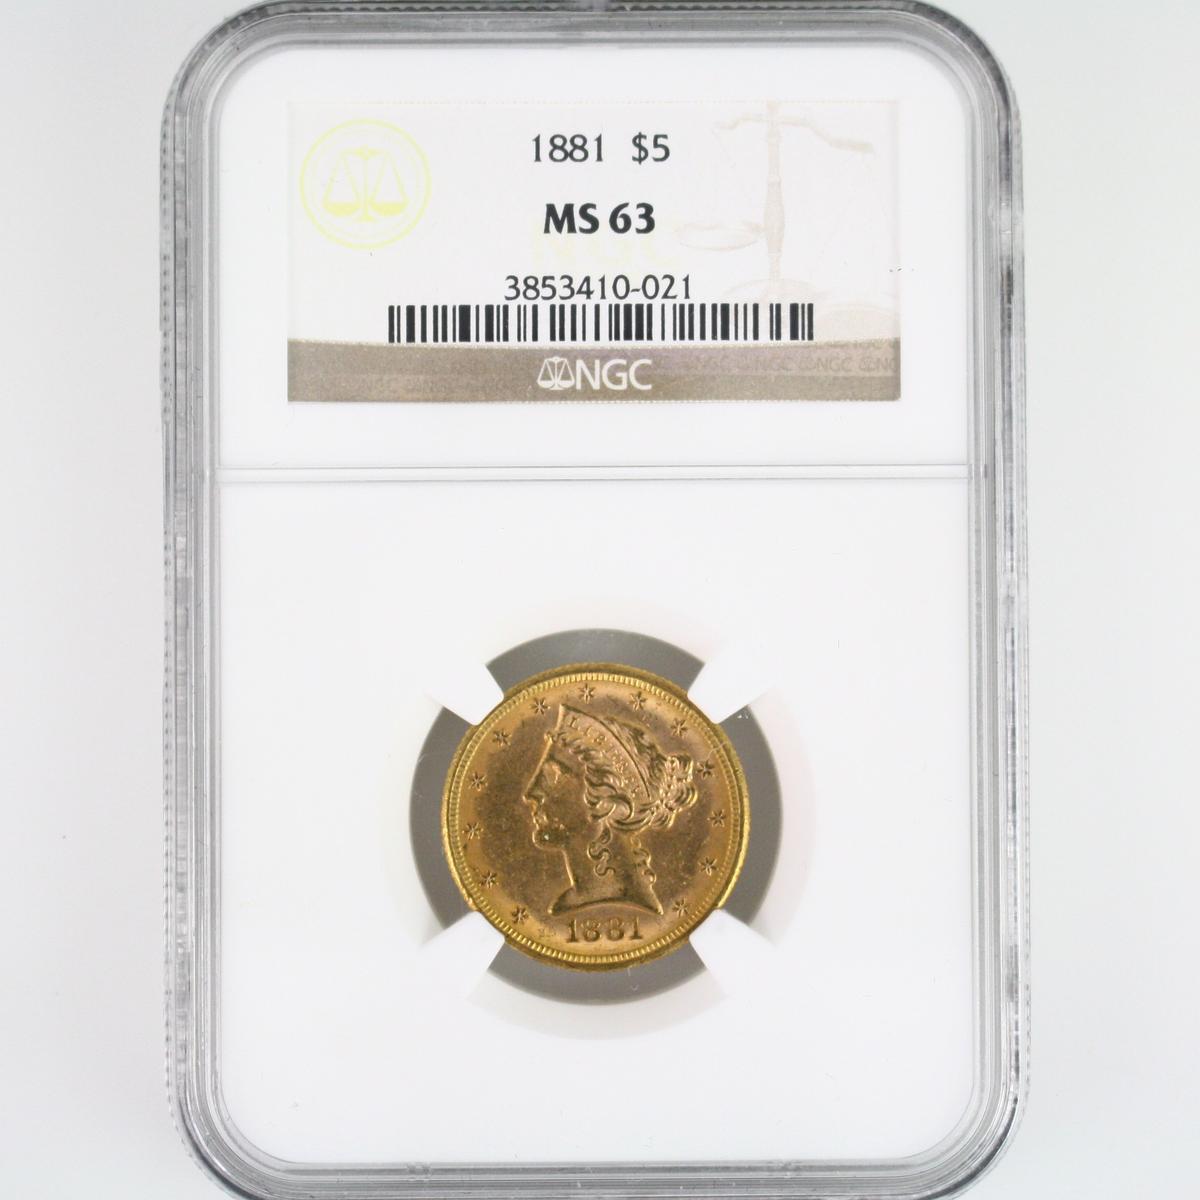 Certified 1881 U.S. $5 Liberty head gold coin